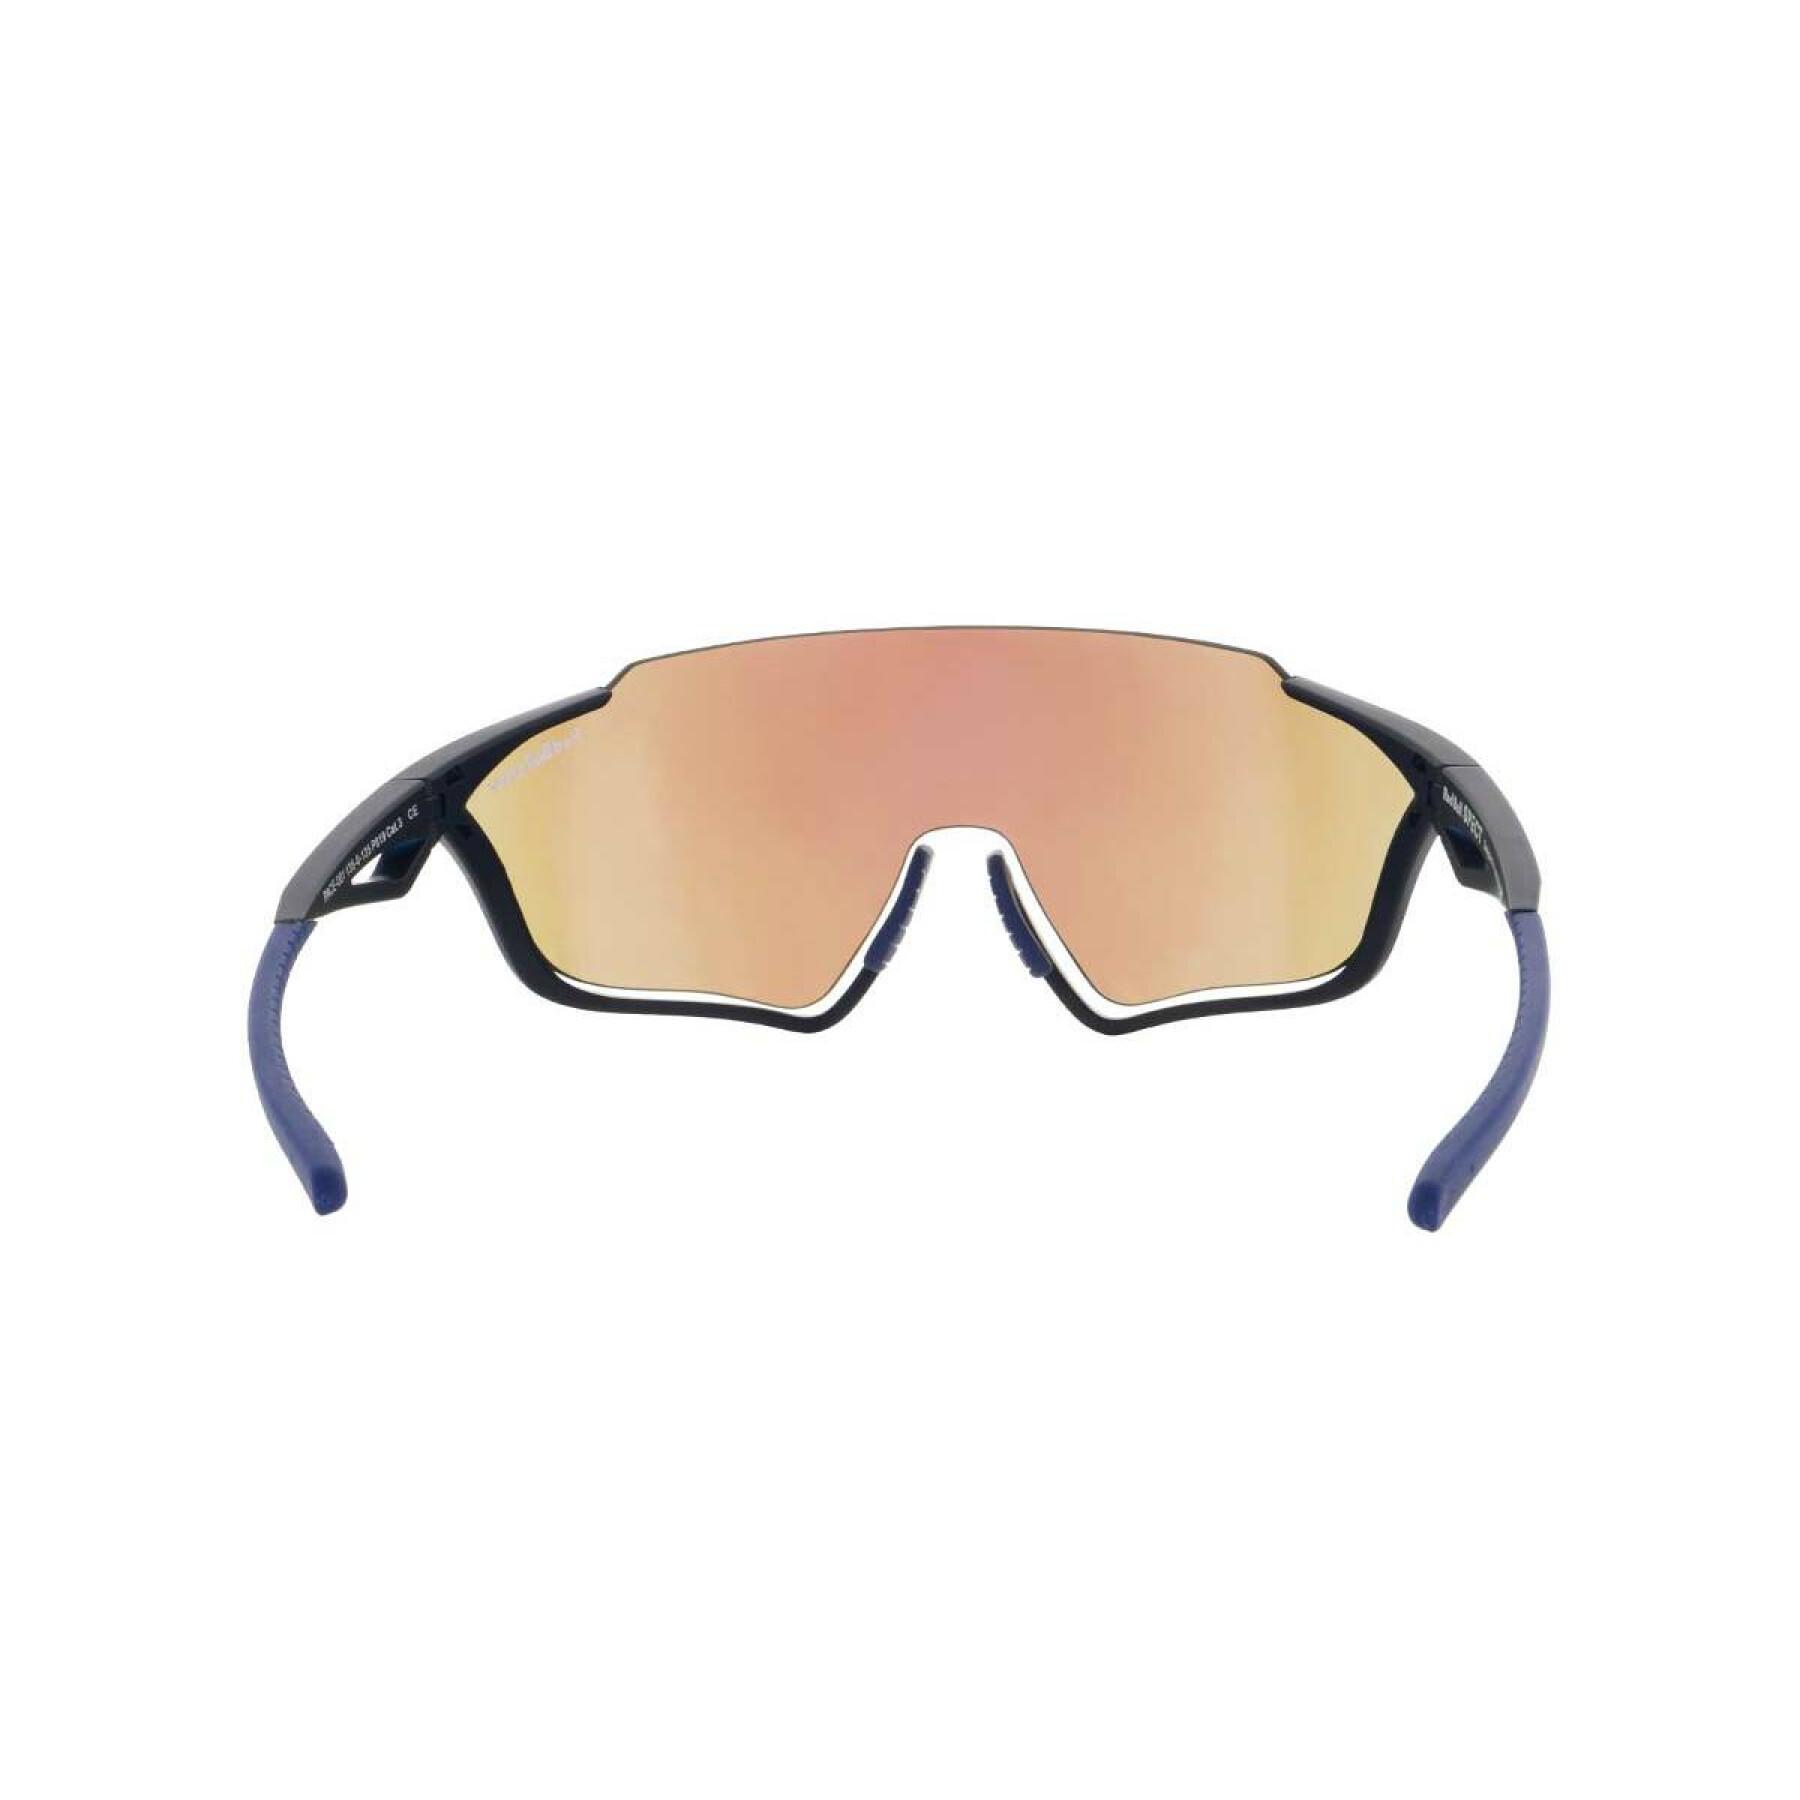 Sonnenbrille Redbull Spect Eyewear Pace-001